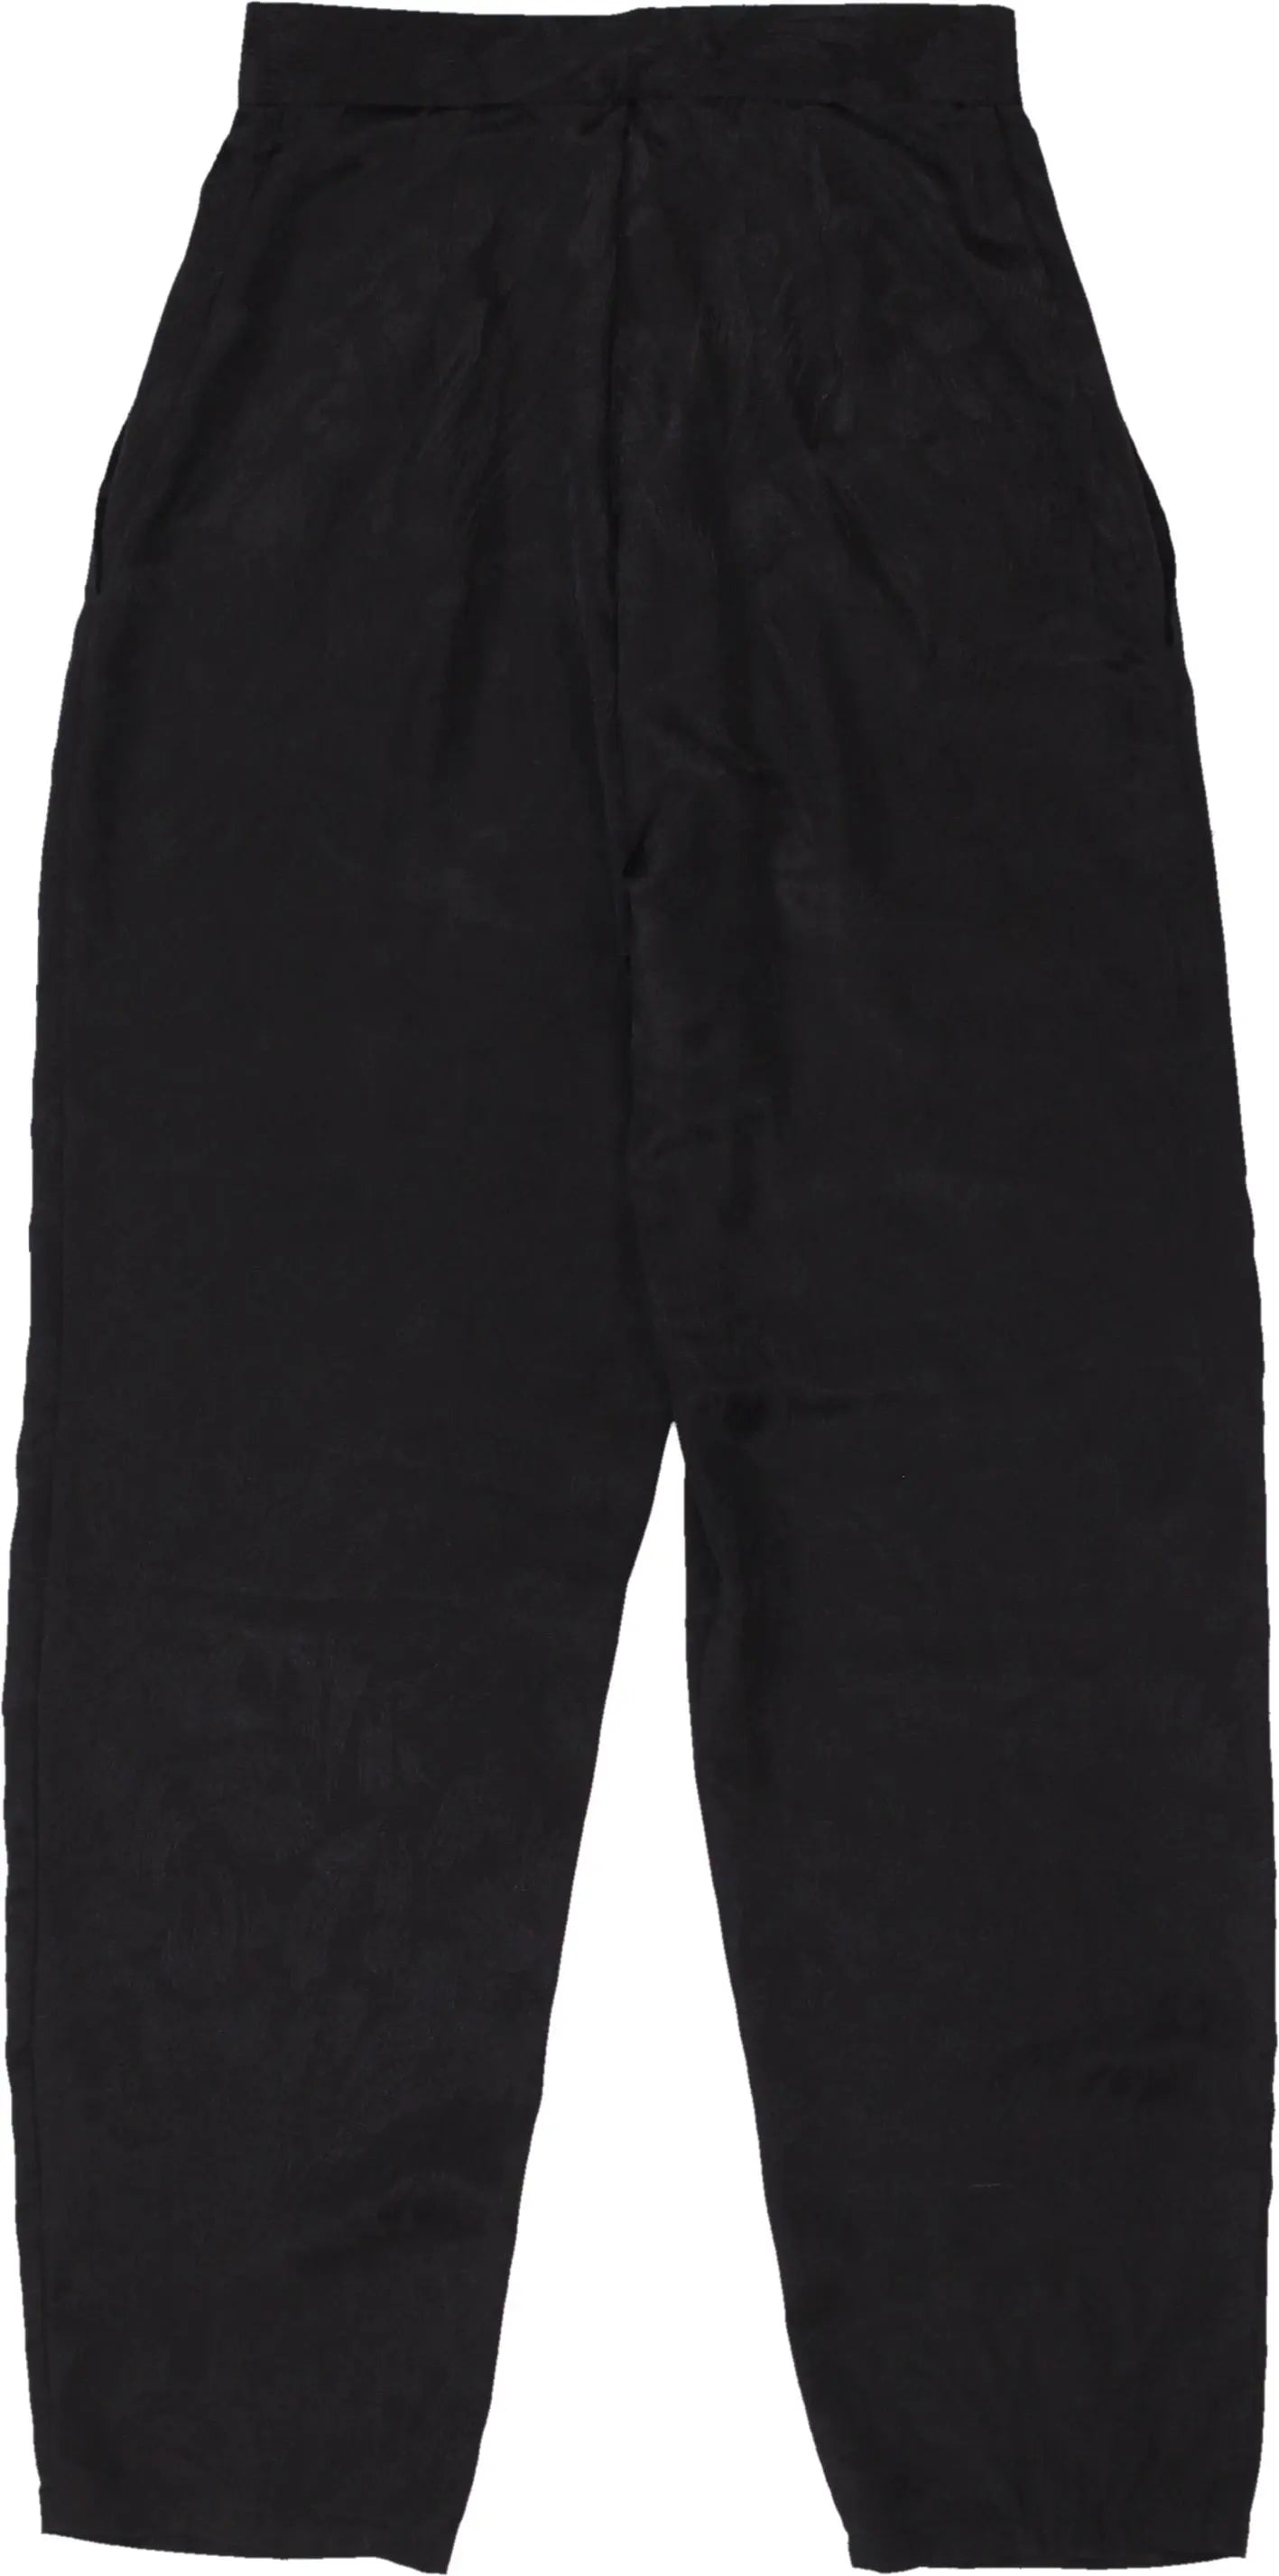 Spengler Mode - Black Satin Pants- ThriftTale.com - Vintage and second handclothing